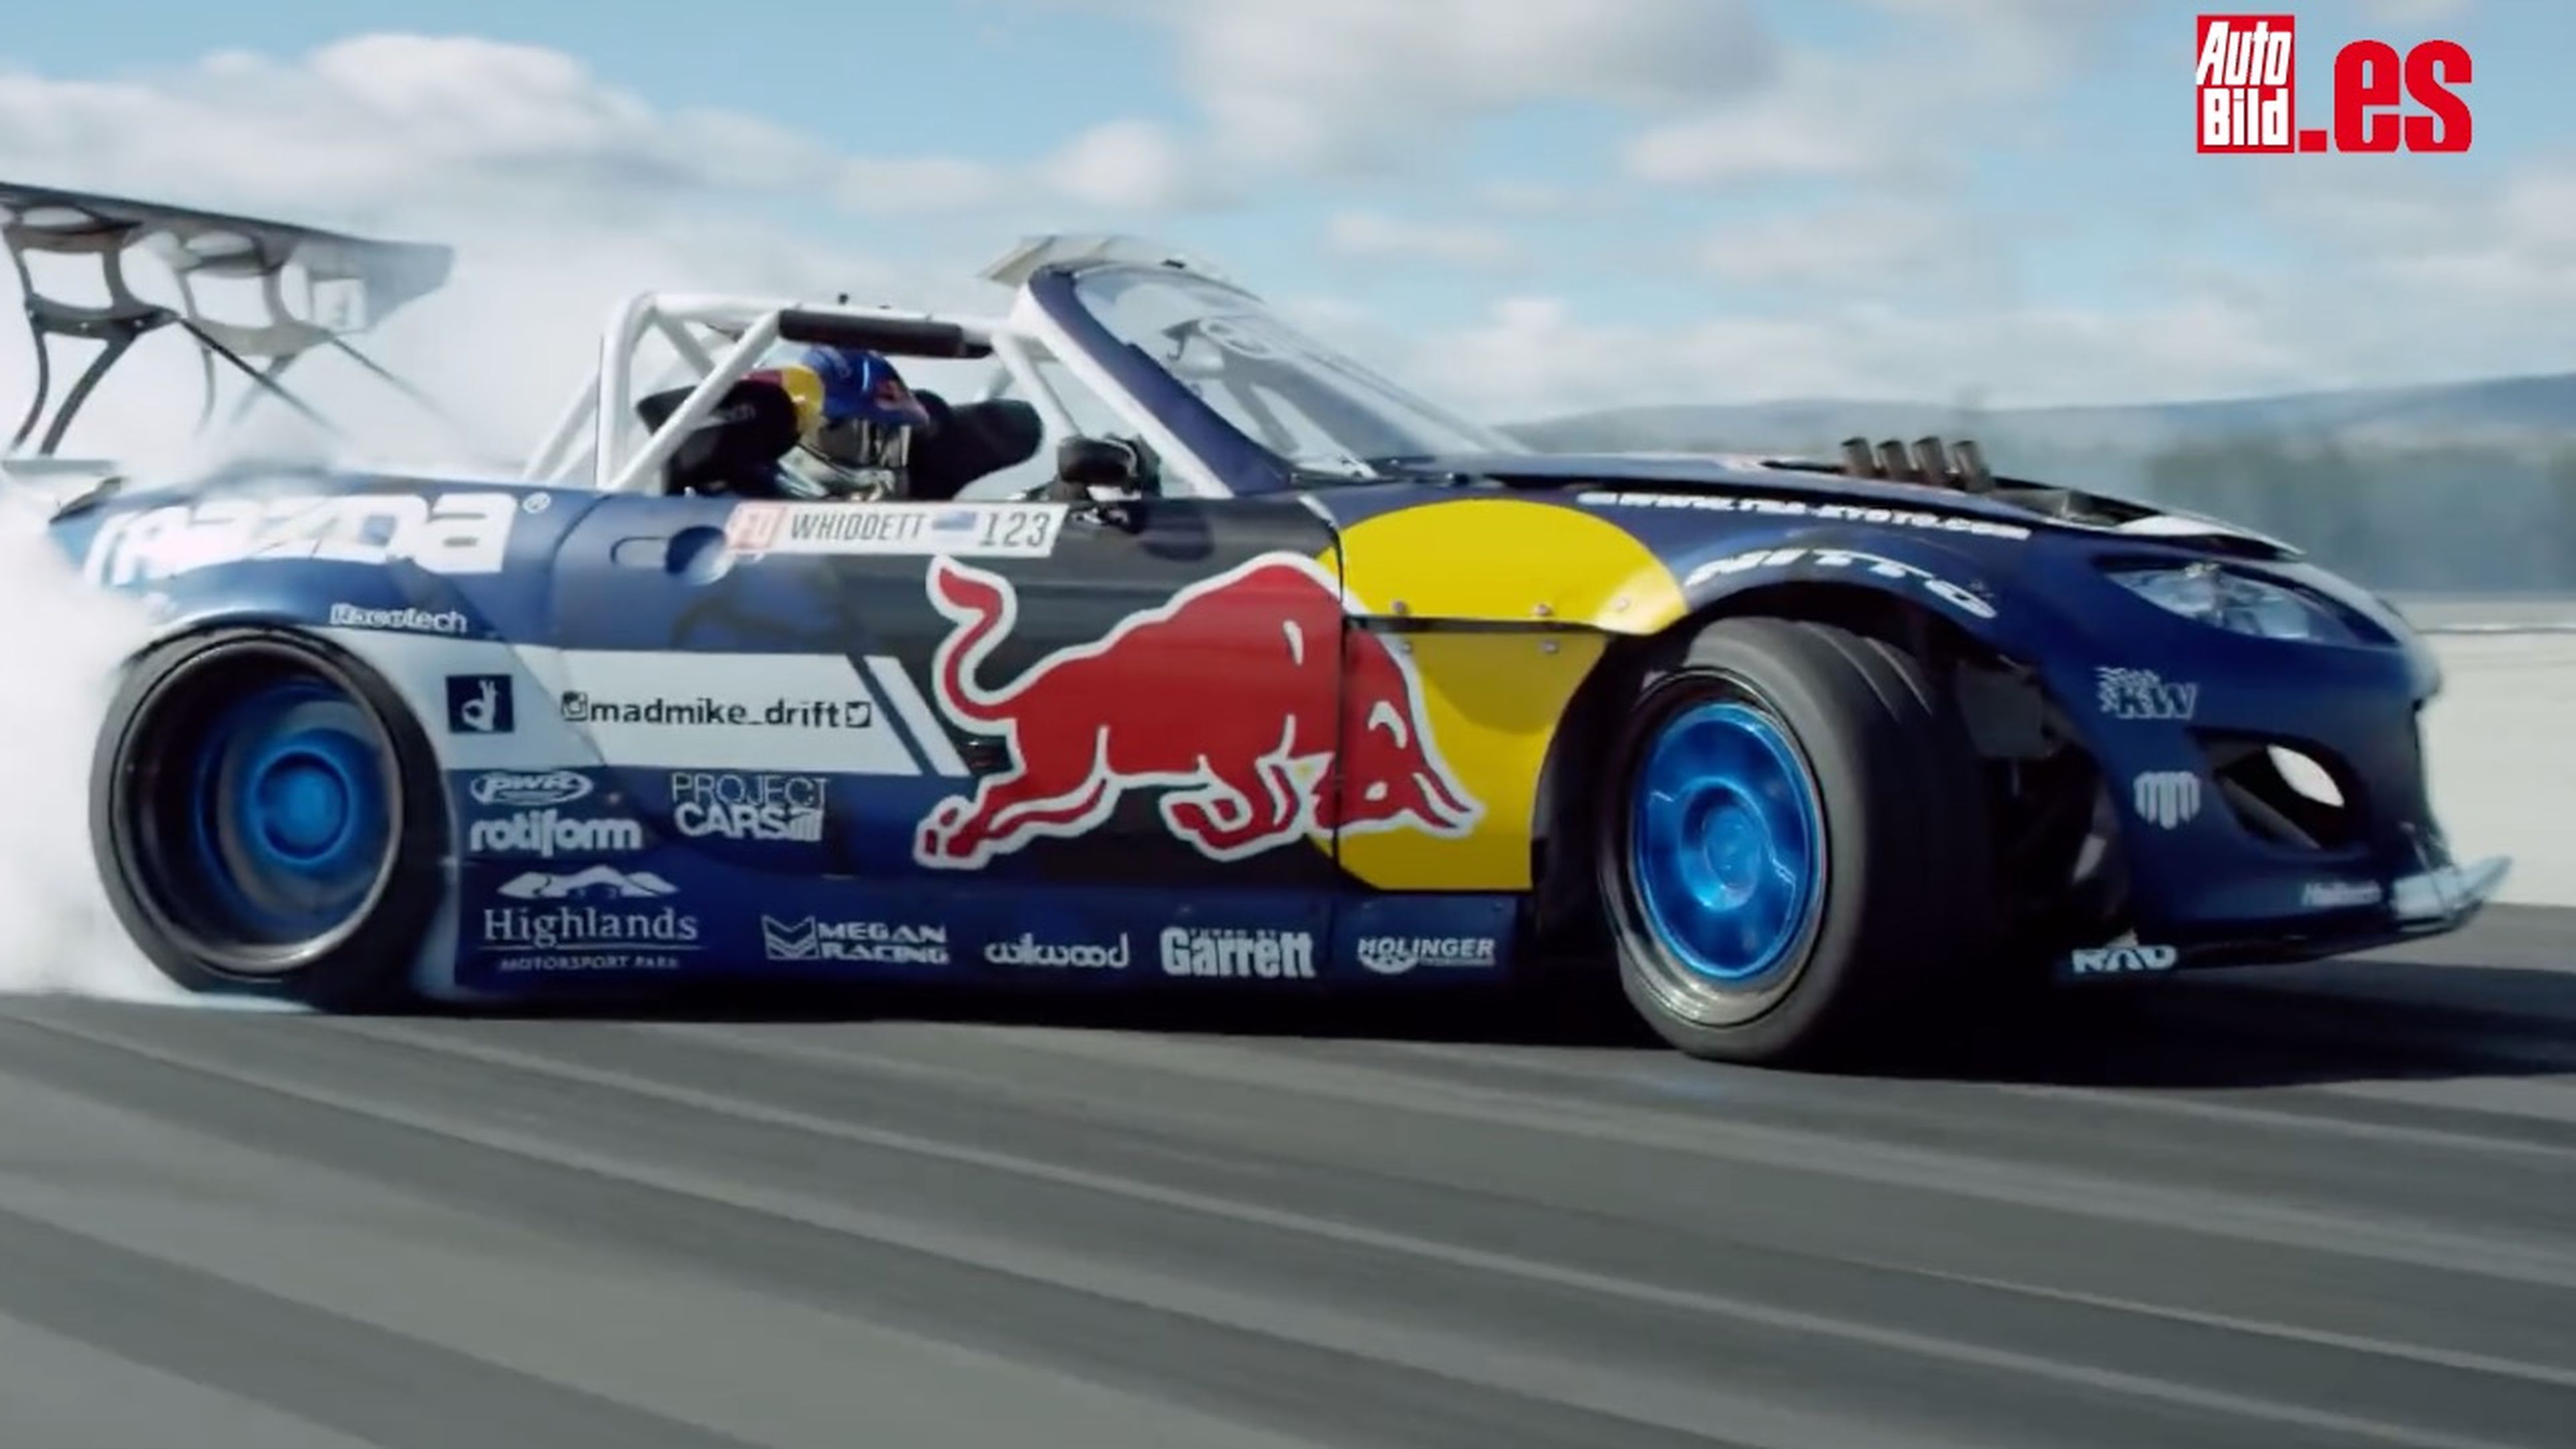 Drift extremo con Mike Whiddett y su Mazda MX-5 "RADBUL"